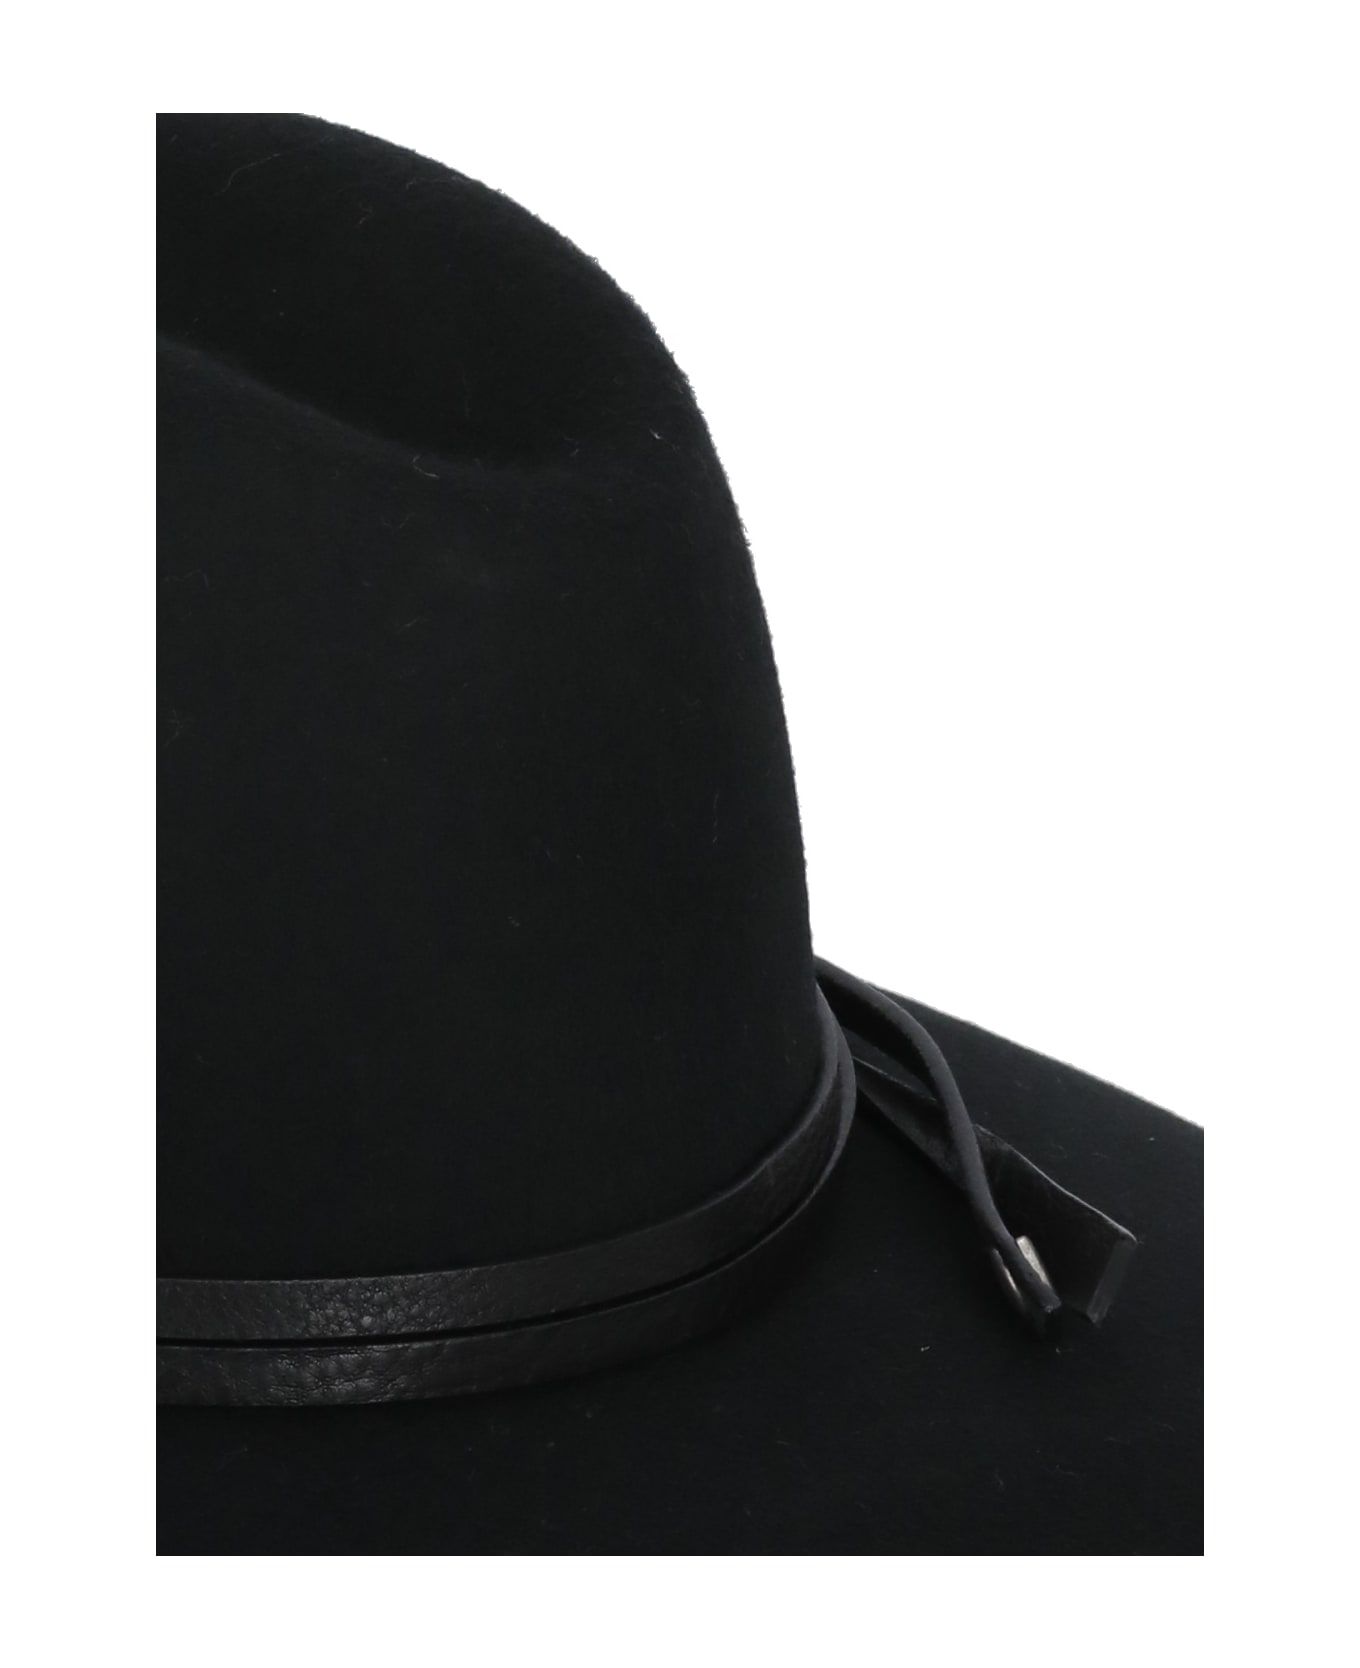 Golden Goose Fedora Hat - black 帽子